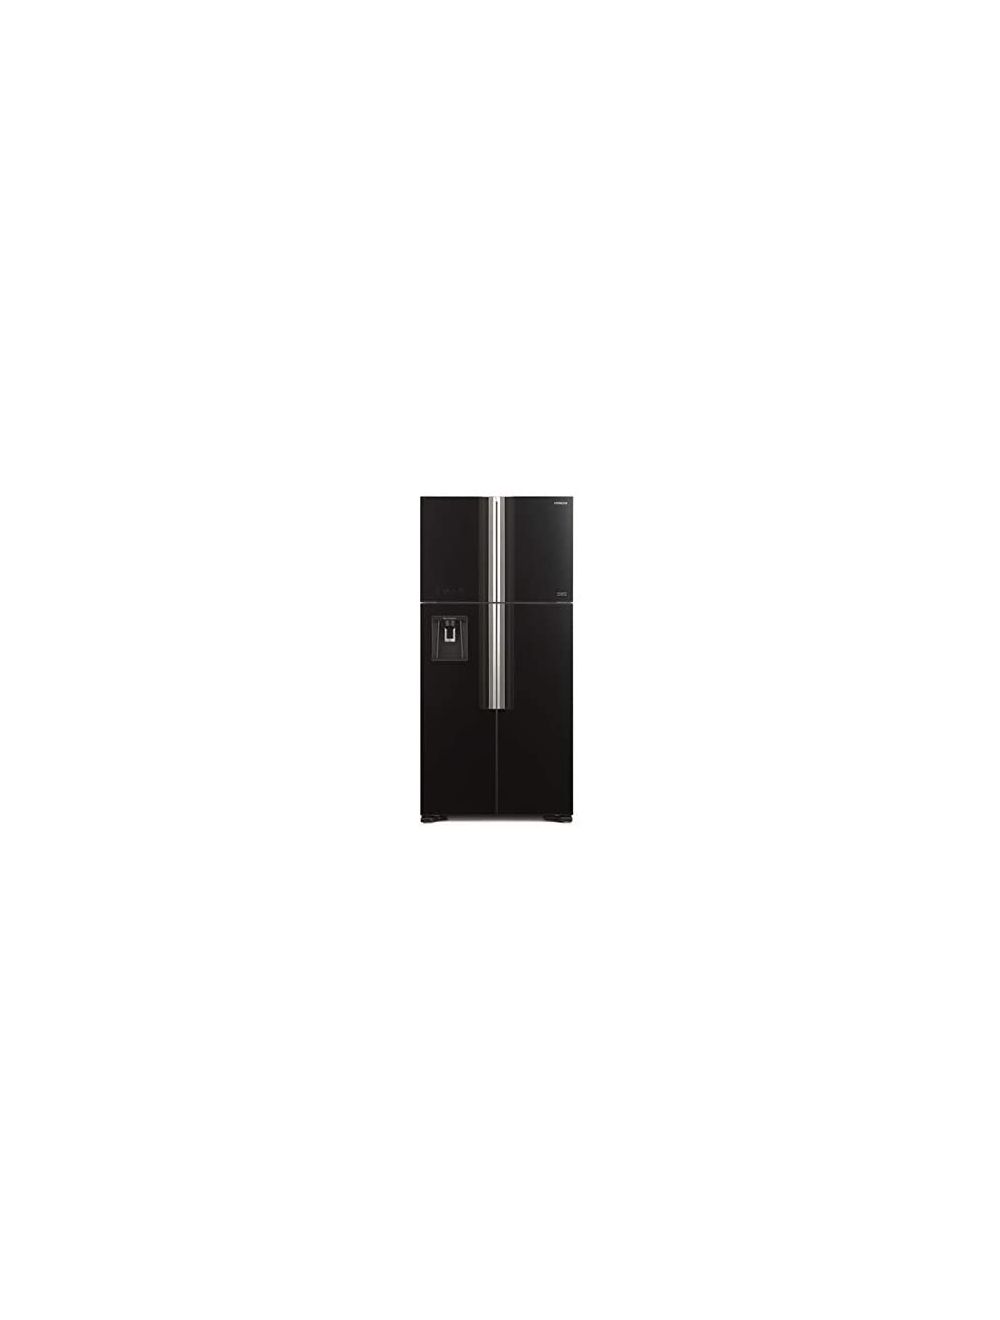 Hitachi 760 L French Door Refrigerator With Water Dispenser-RW760PUK7GBK